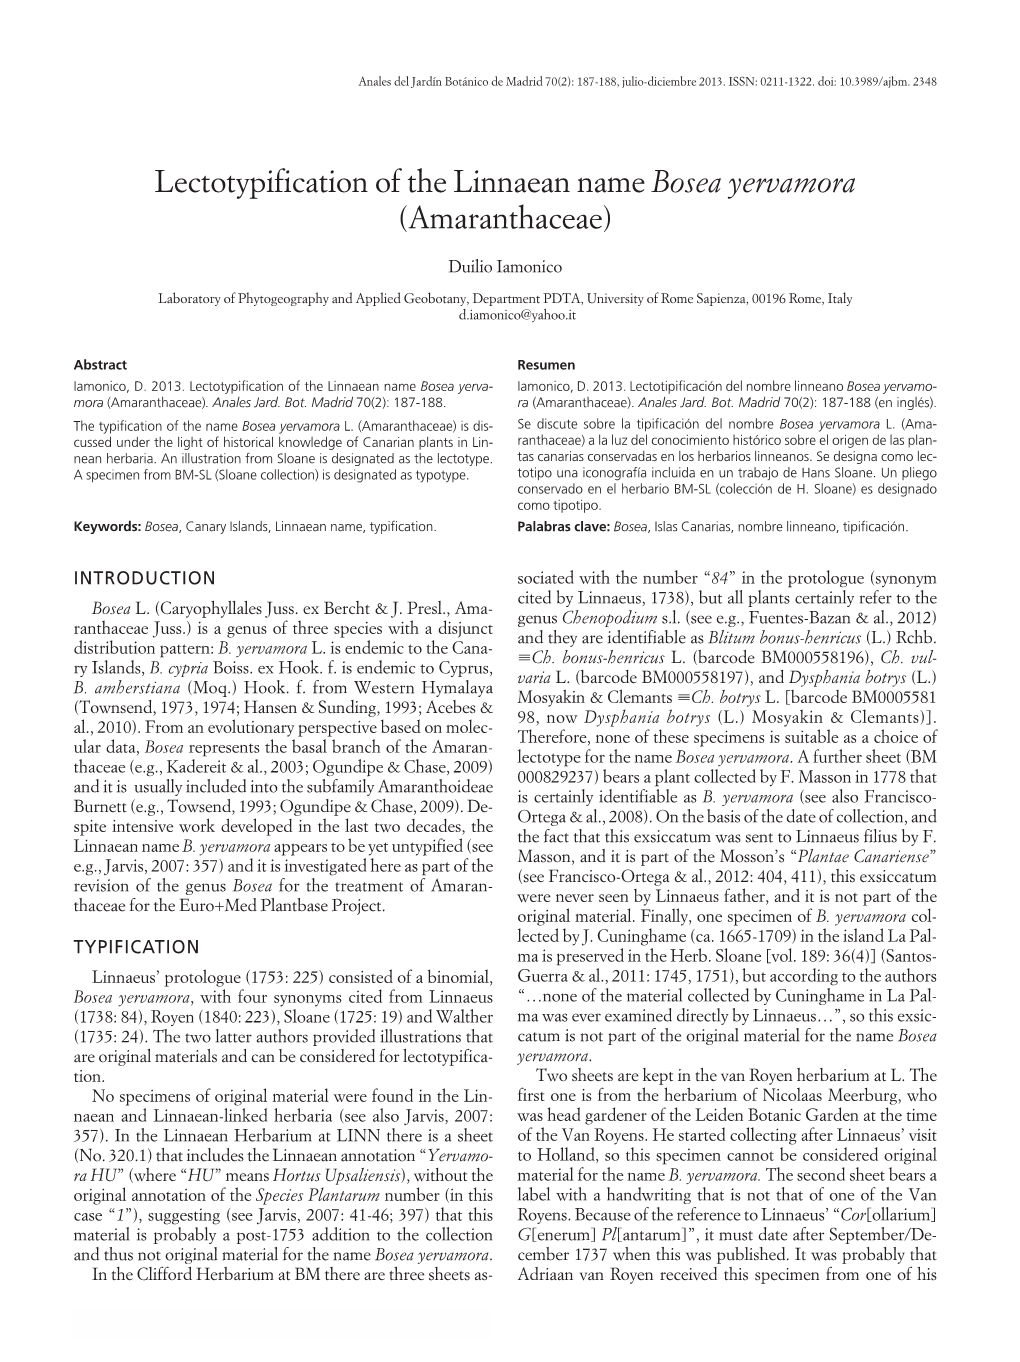 Lectotypification of the Linnaean Name Bosea Yervamora (Amaranthaceae)